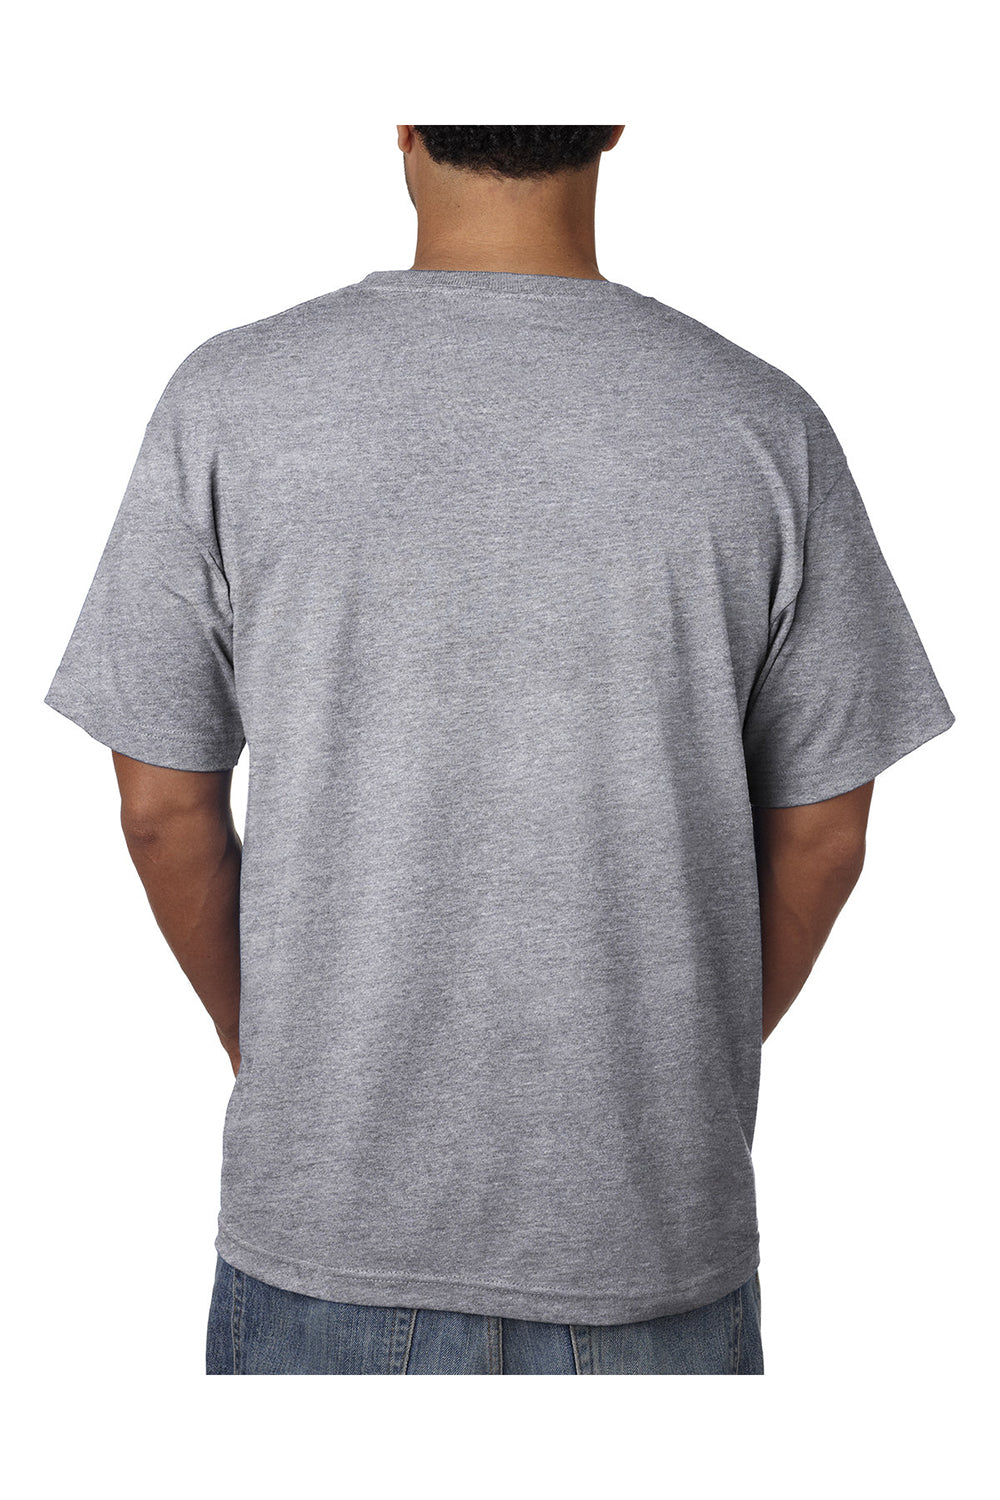 Bayside BA5070 Mens USA Made Short Sleeve Crewneck T-Shirt w/ Pocket Dark Ash Grey Model Back